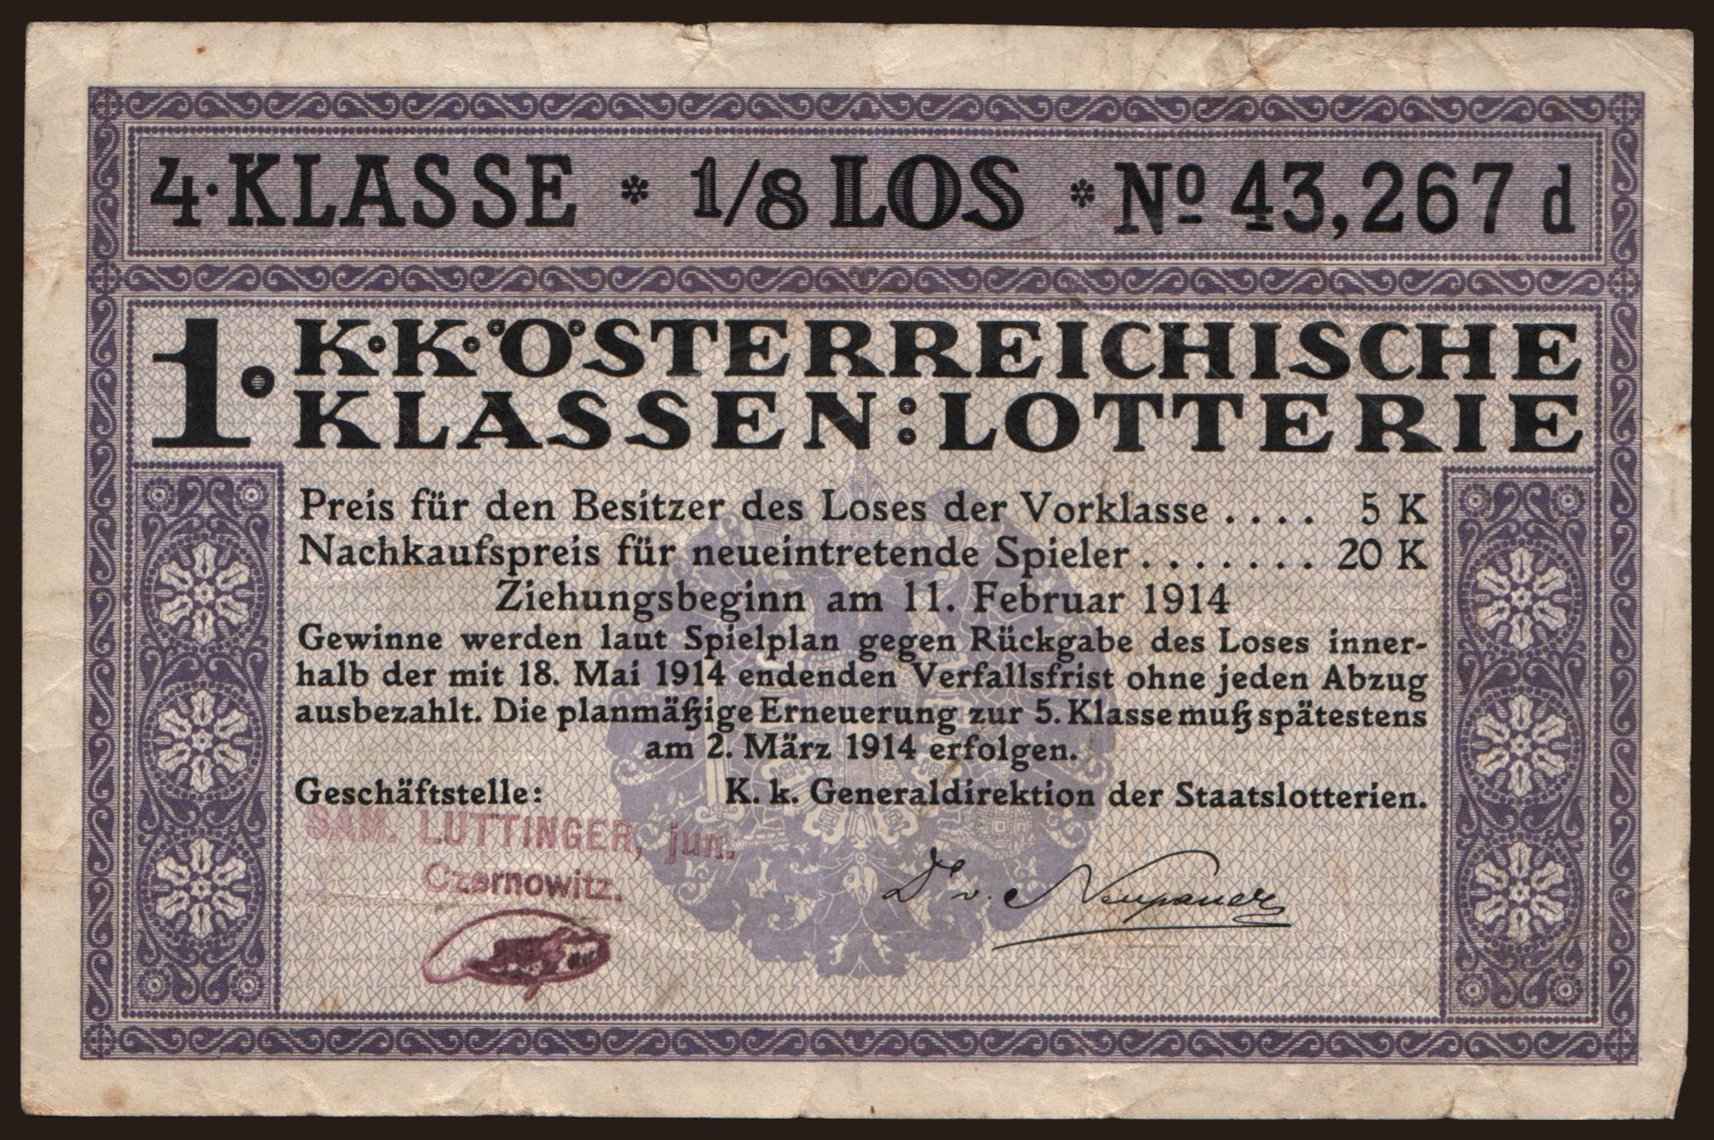 K.K. Österreichische Klassen-Lotterie, 1/8 Los, 1914